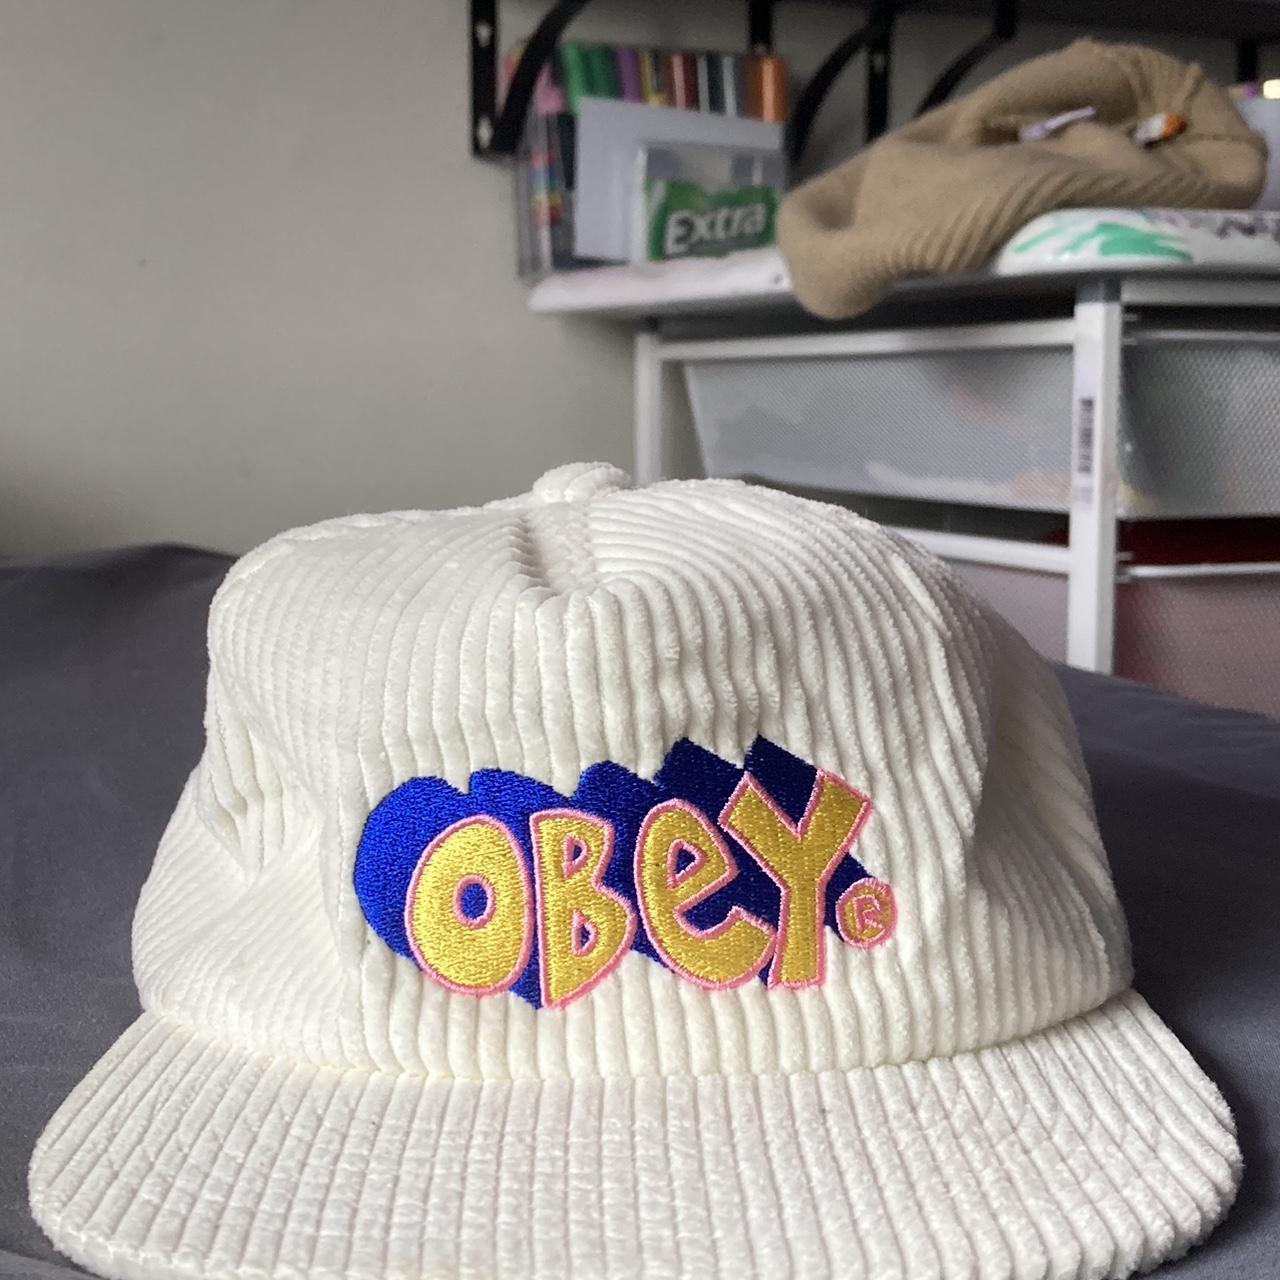 Obey Men's Cream Hat